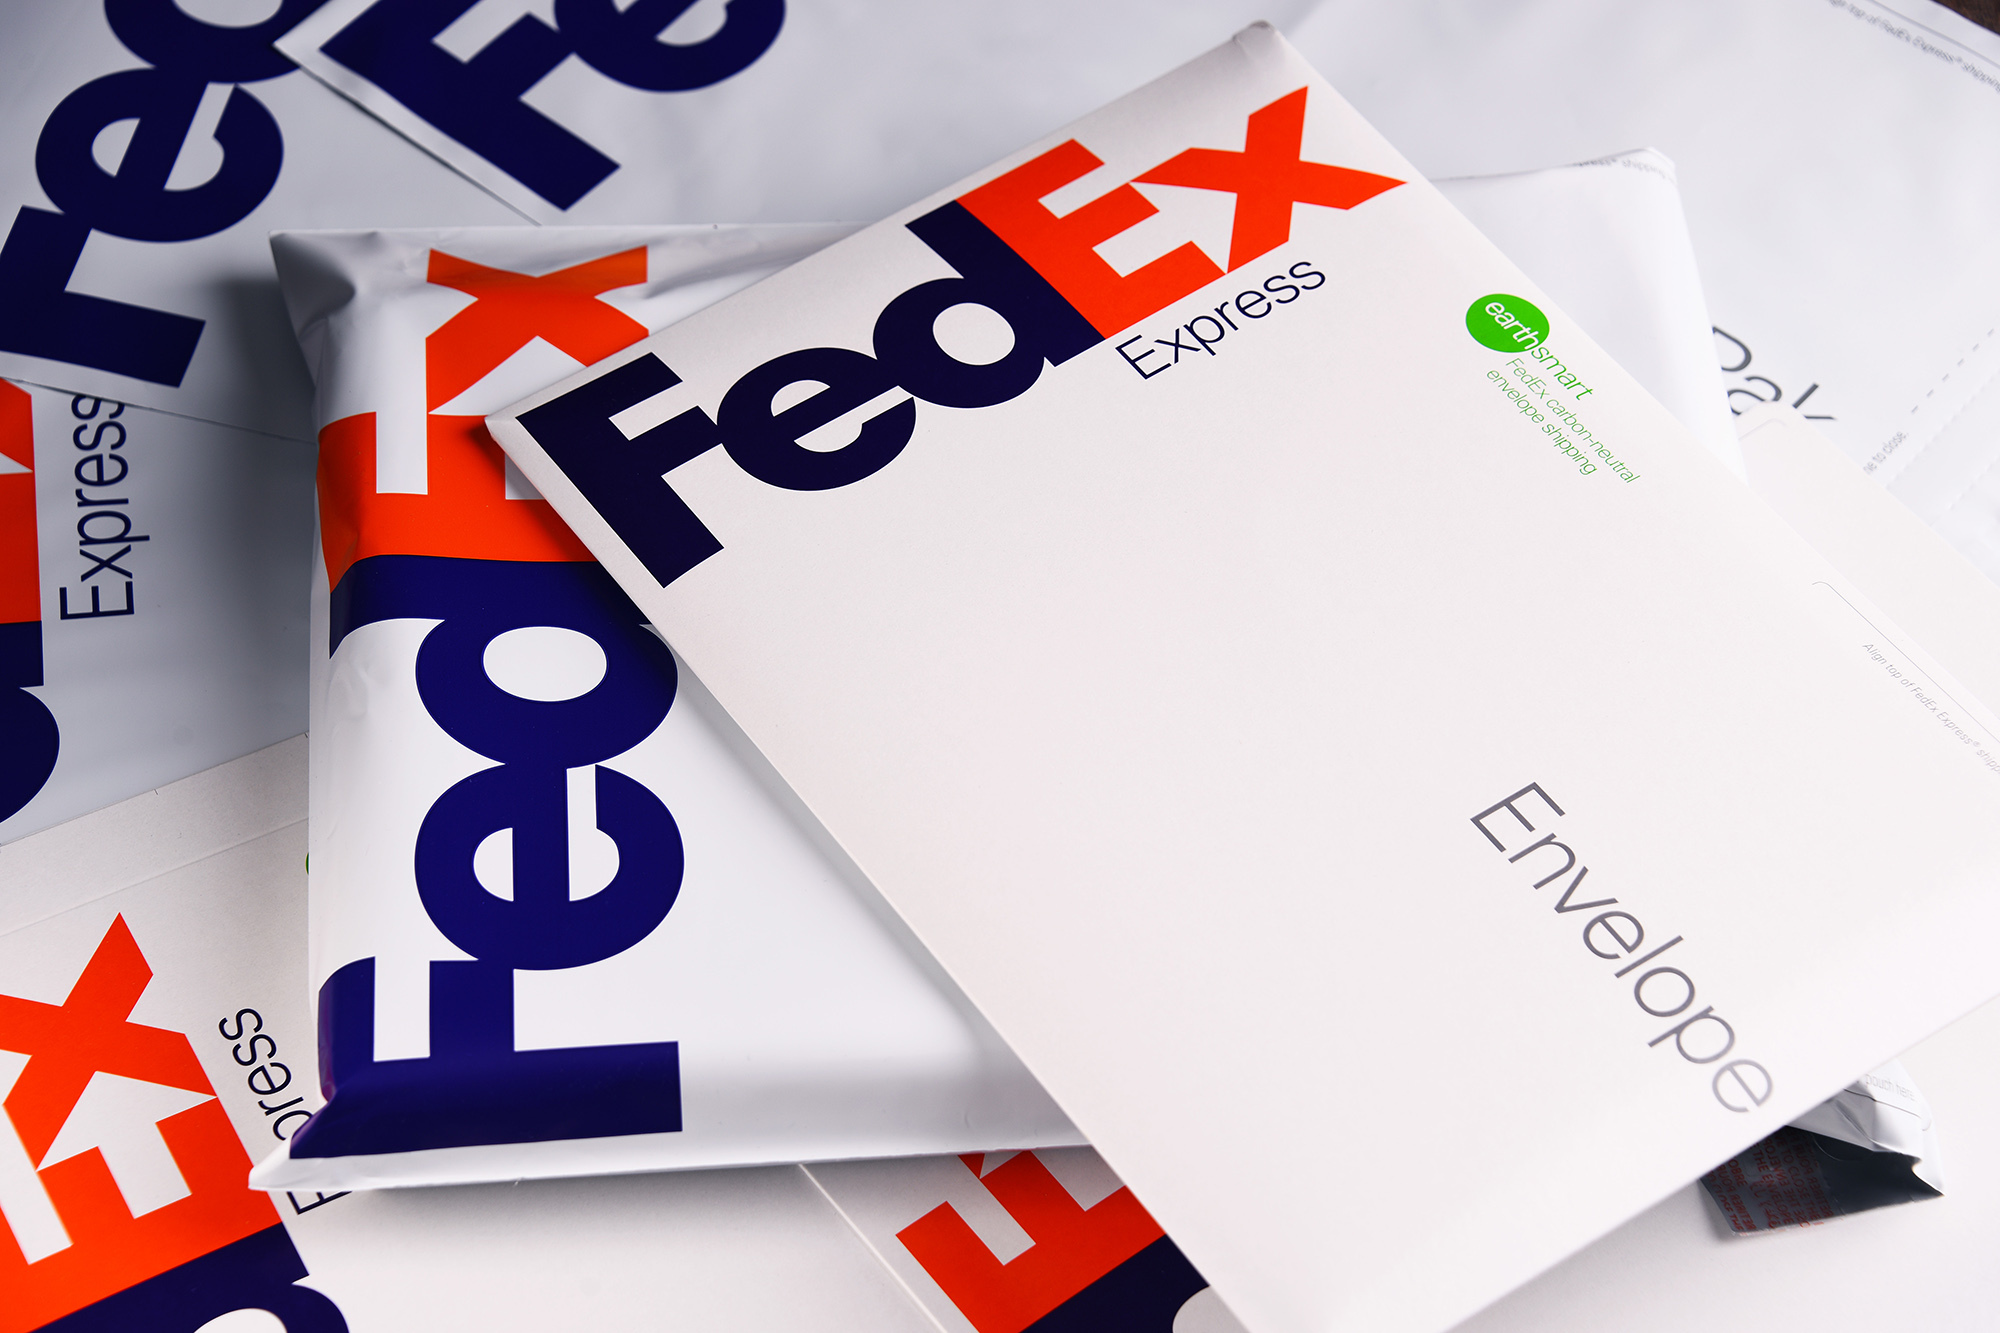 Fedex express feature